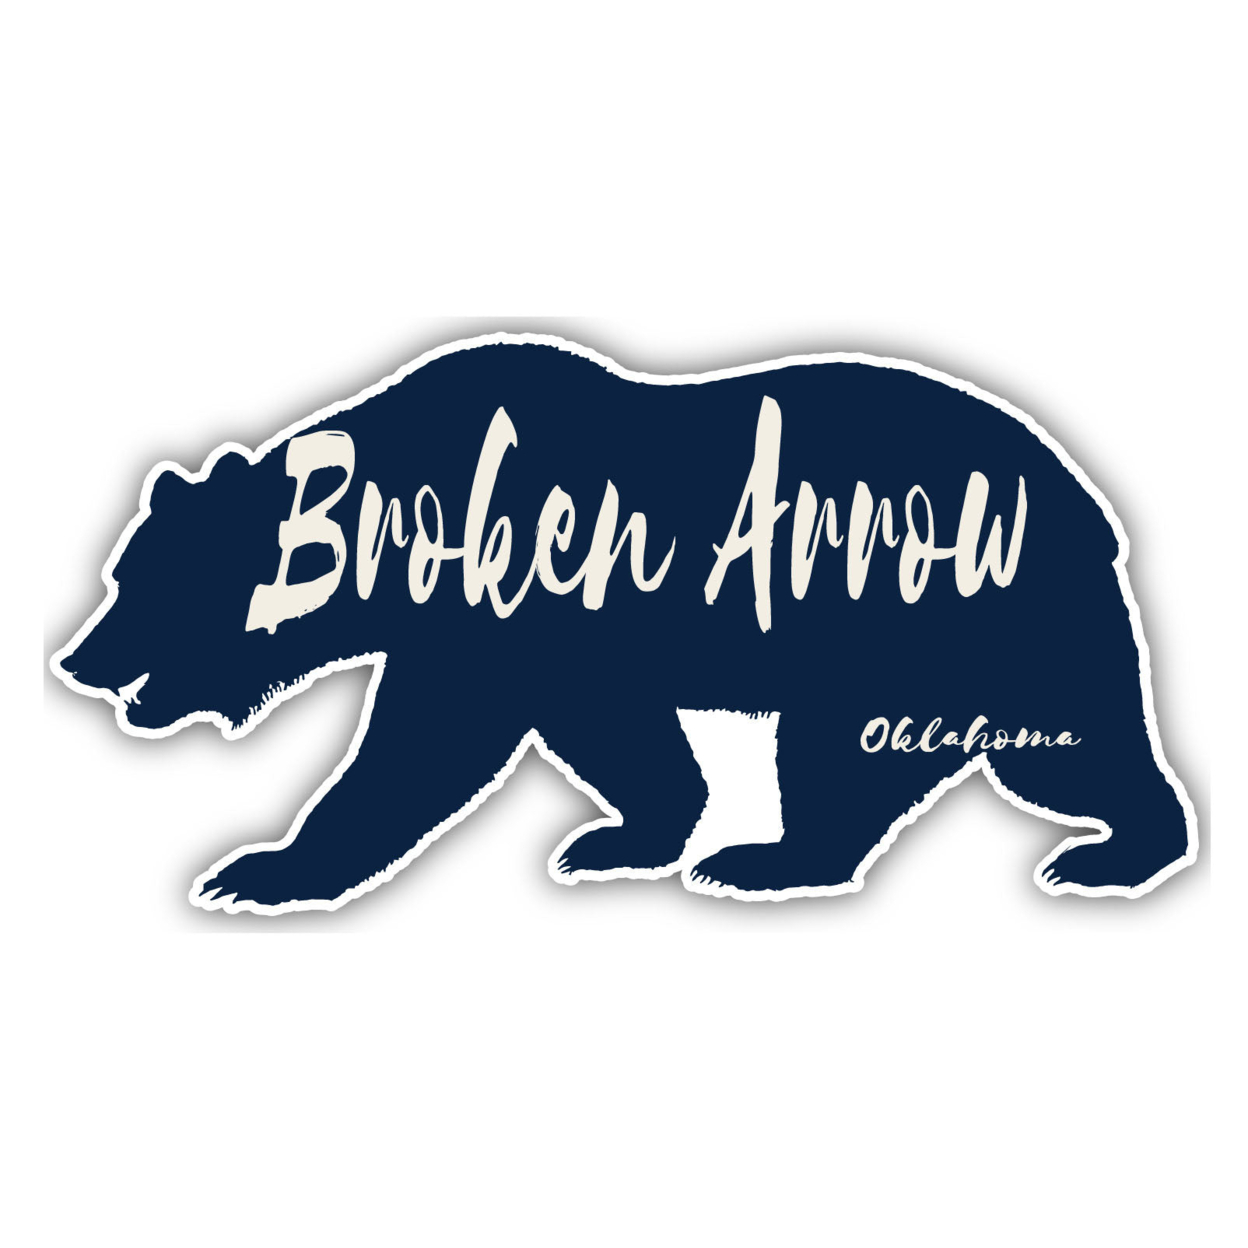 Broken Arrow Oklahoma Souvenir Decorative Stickers (Choose Theme And Size) - Single Unit, 2-Inch, Bear